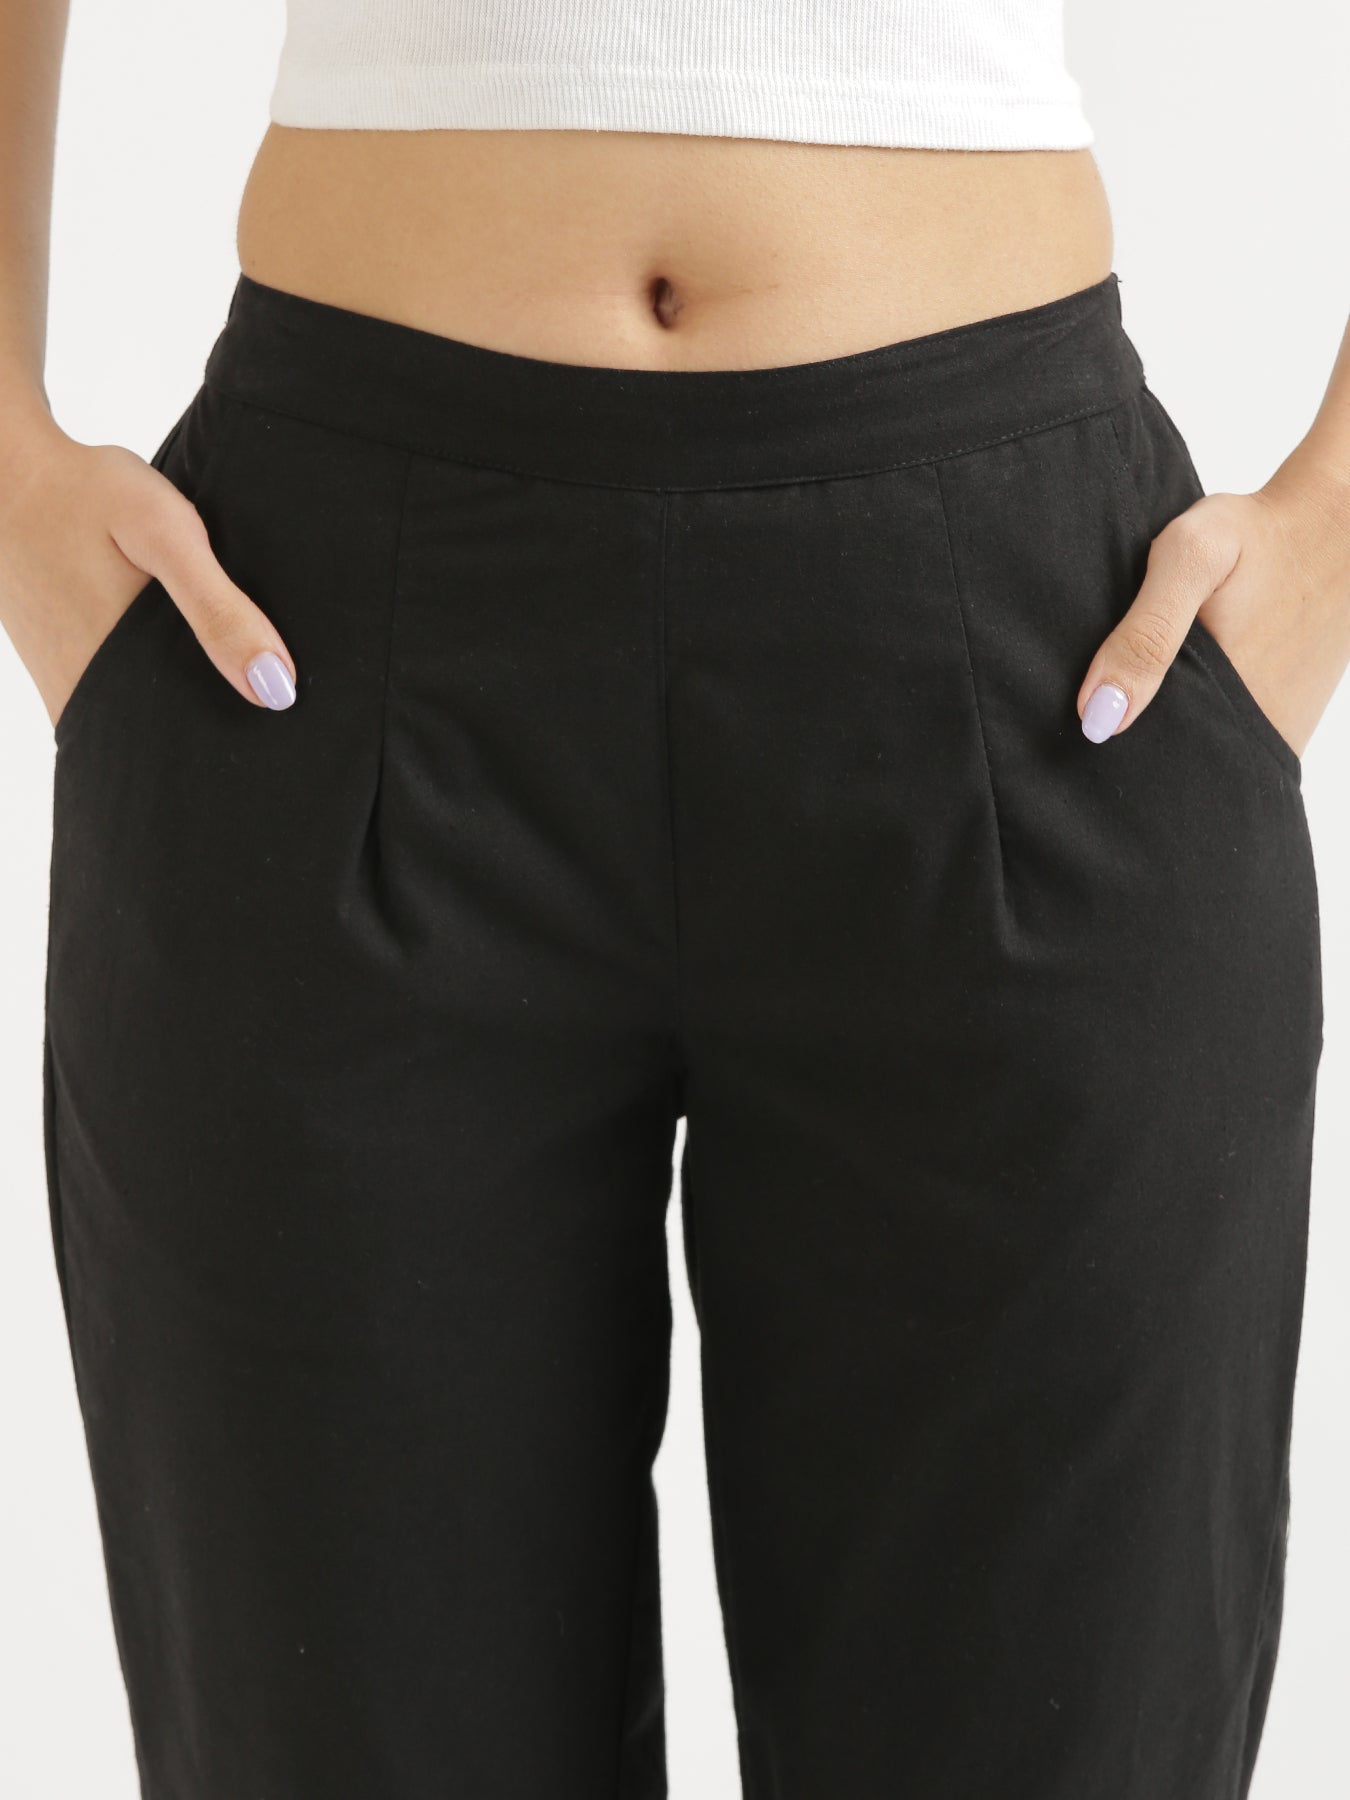 Men Formal Trouser Black Comfort Fit Corporate Pants Online TRO.1 - Nool